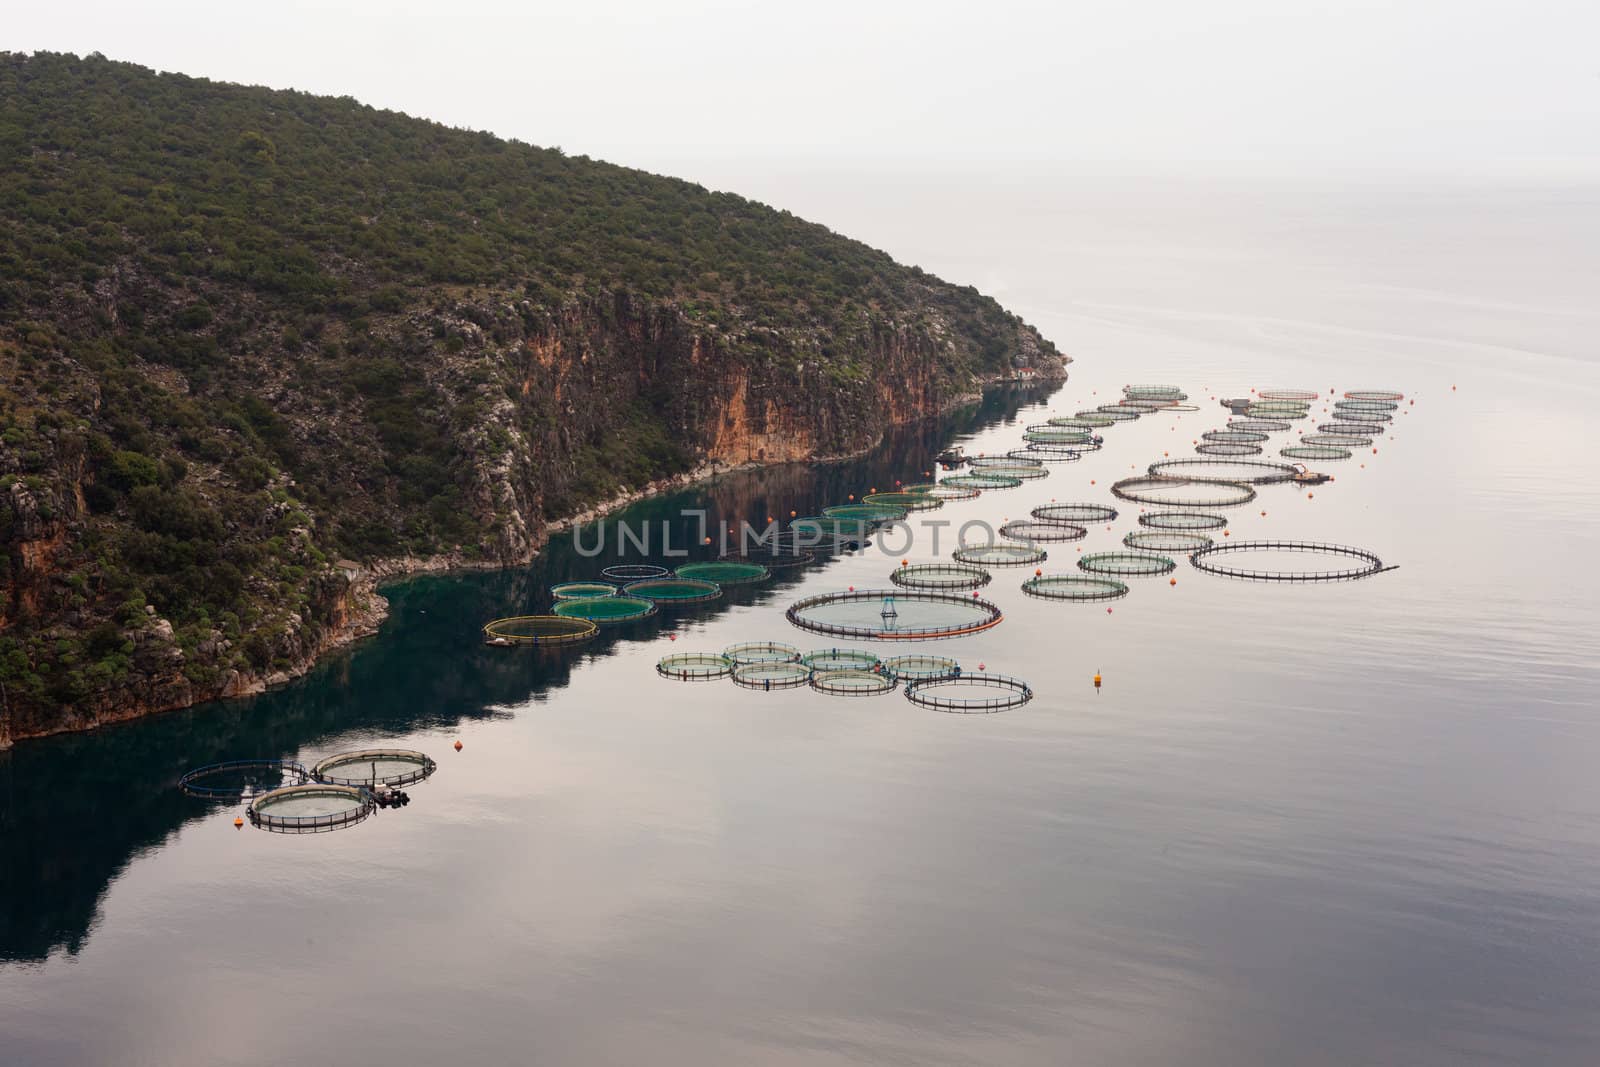 Aquaculture in calm bay offshore Peleponnes island, Greece, Europe.